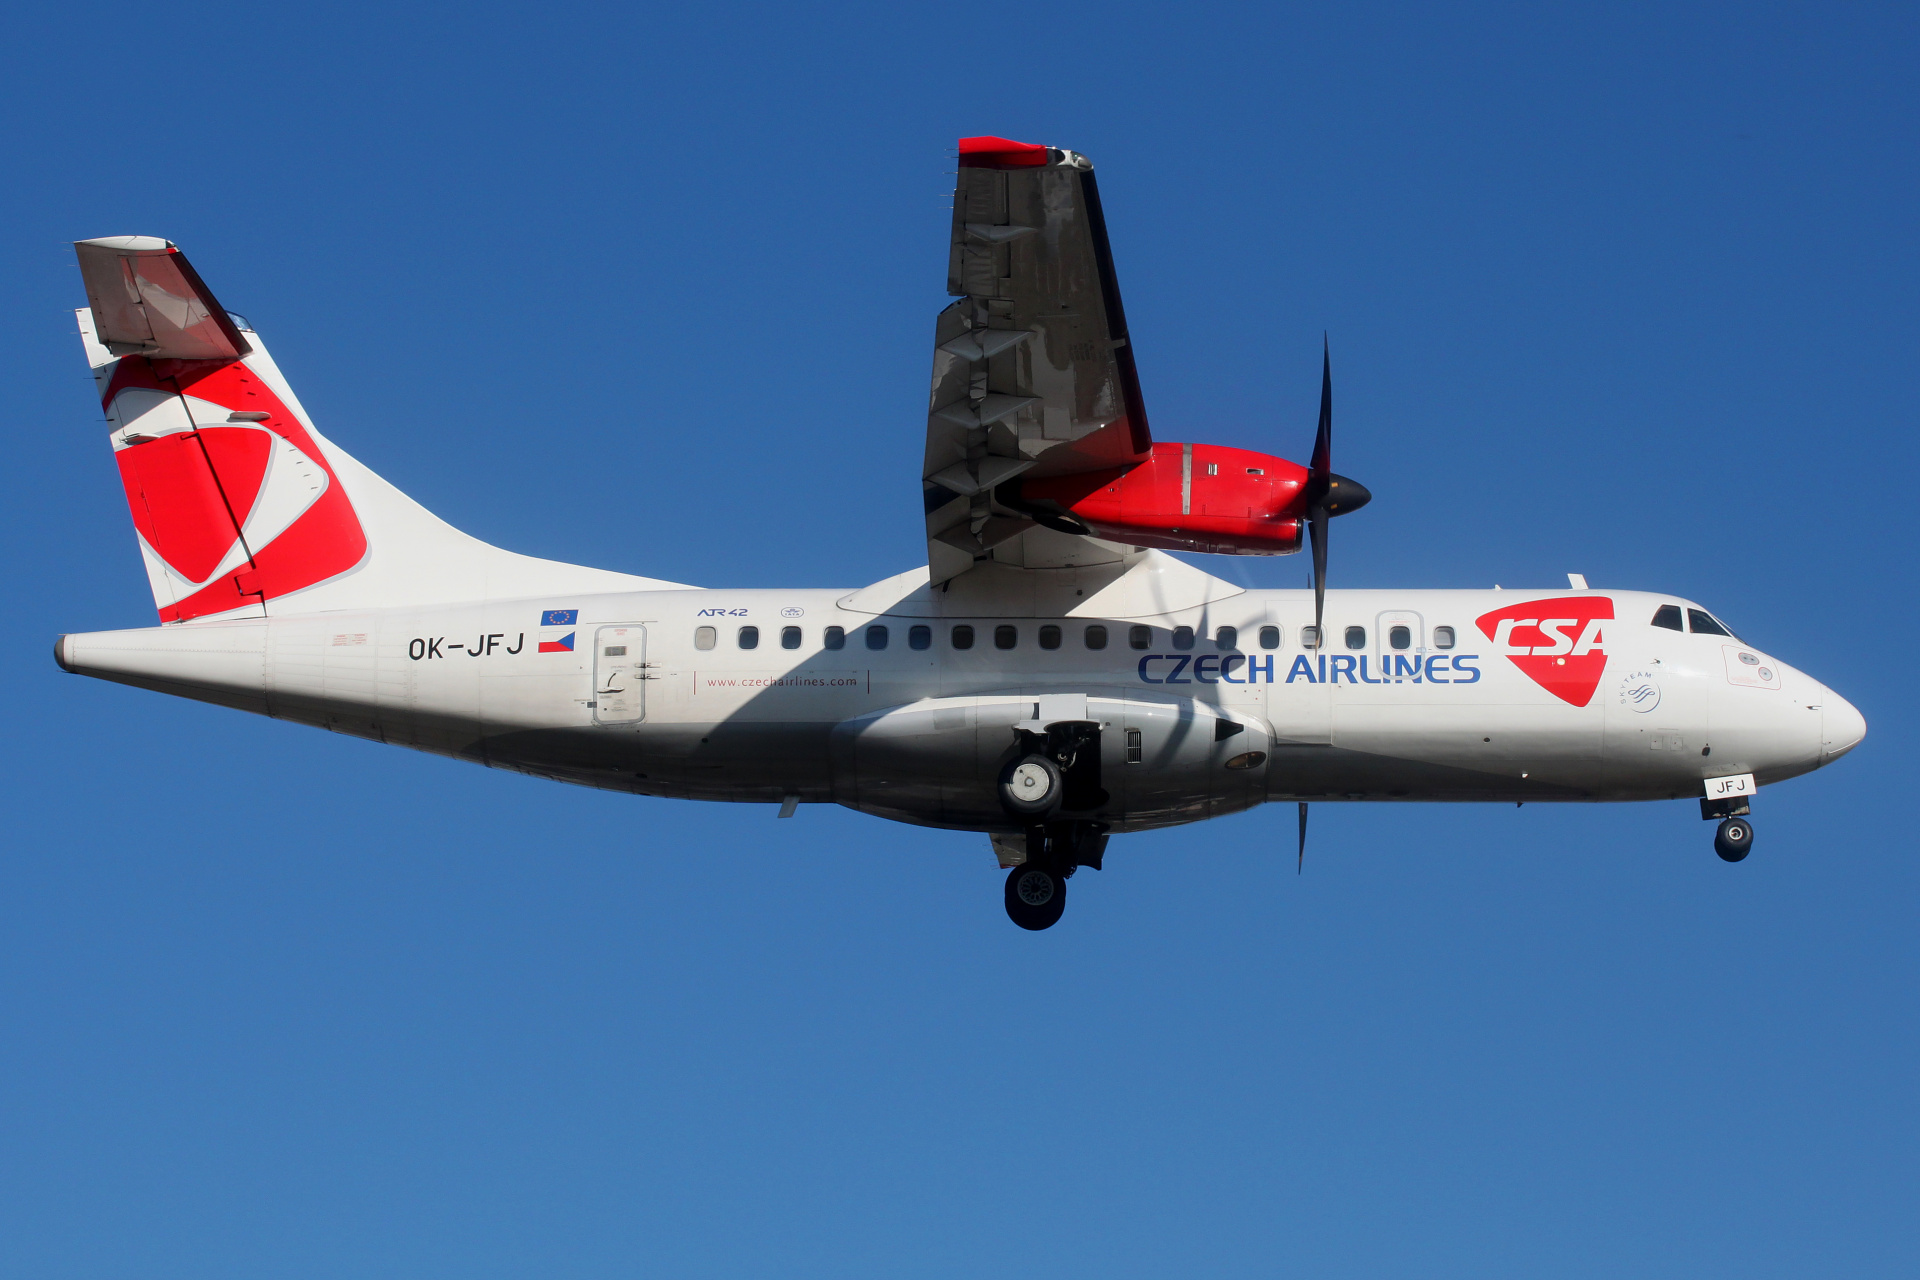 OK-JFJ (Aircraft » EPWA Spotting » ATR 42 » CSA Czech Airlines)